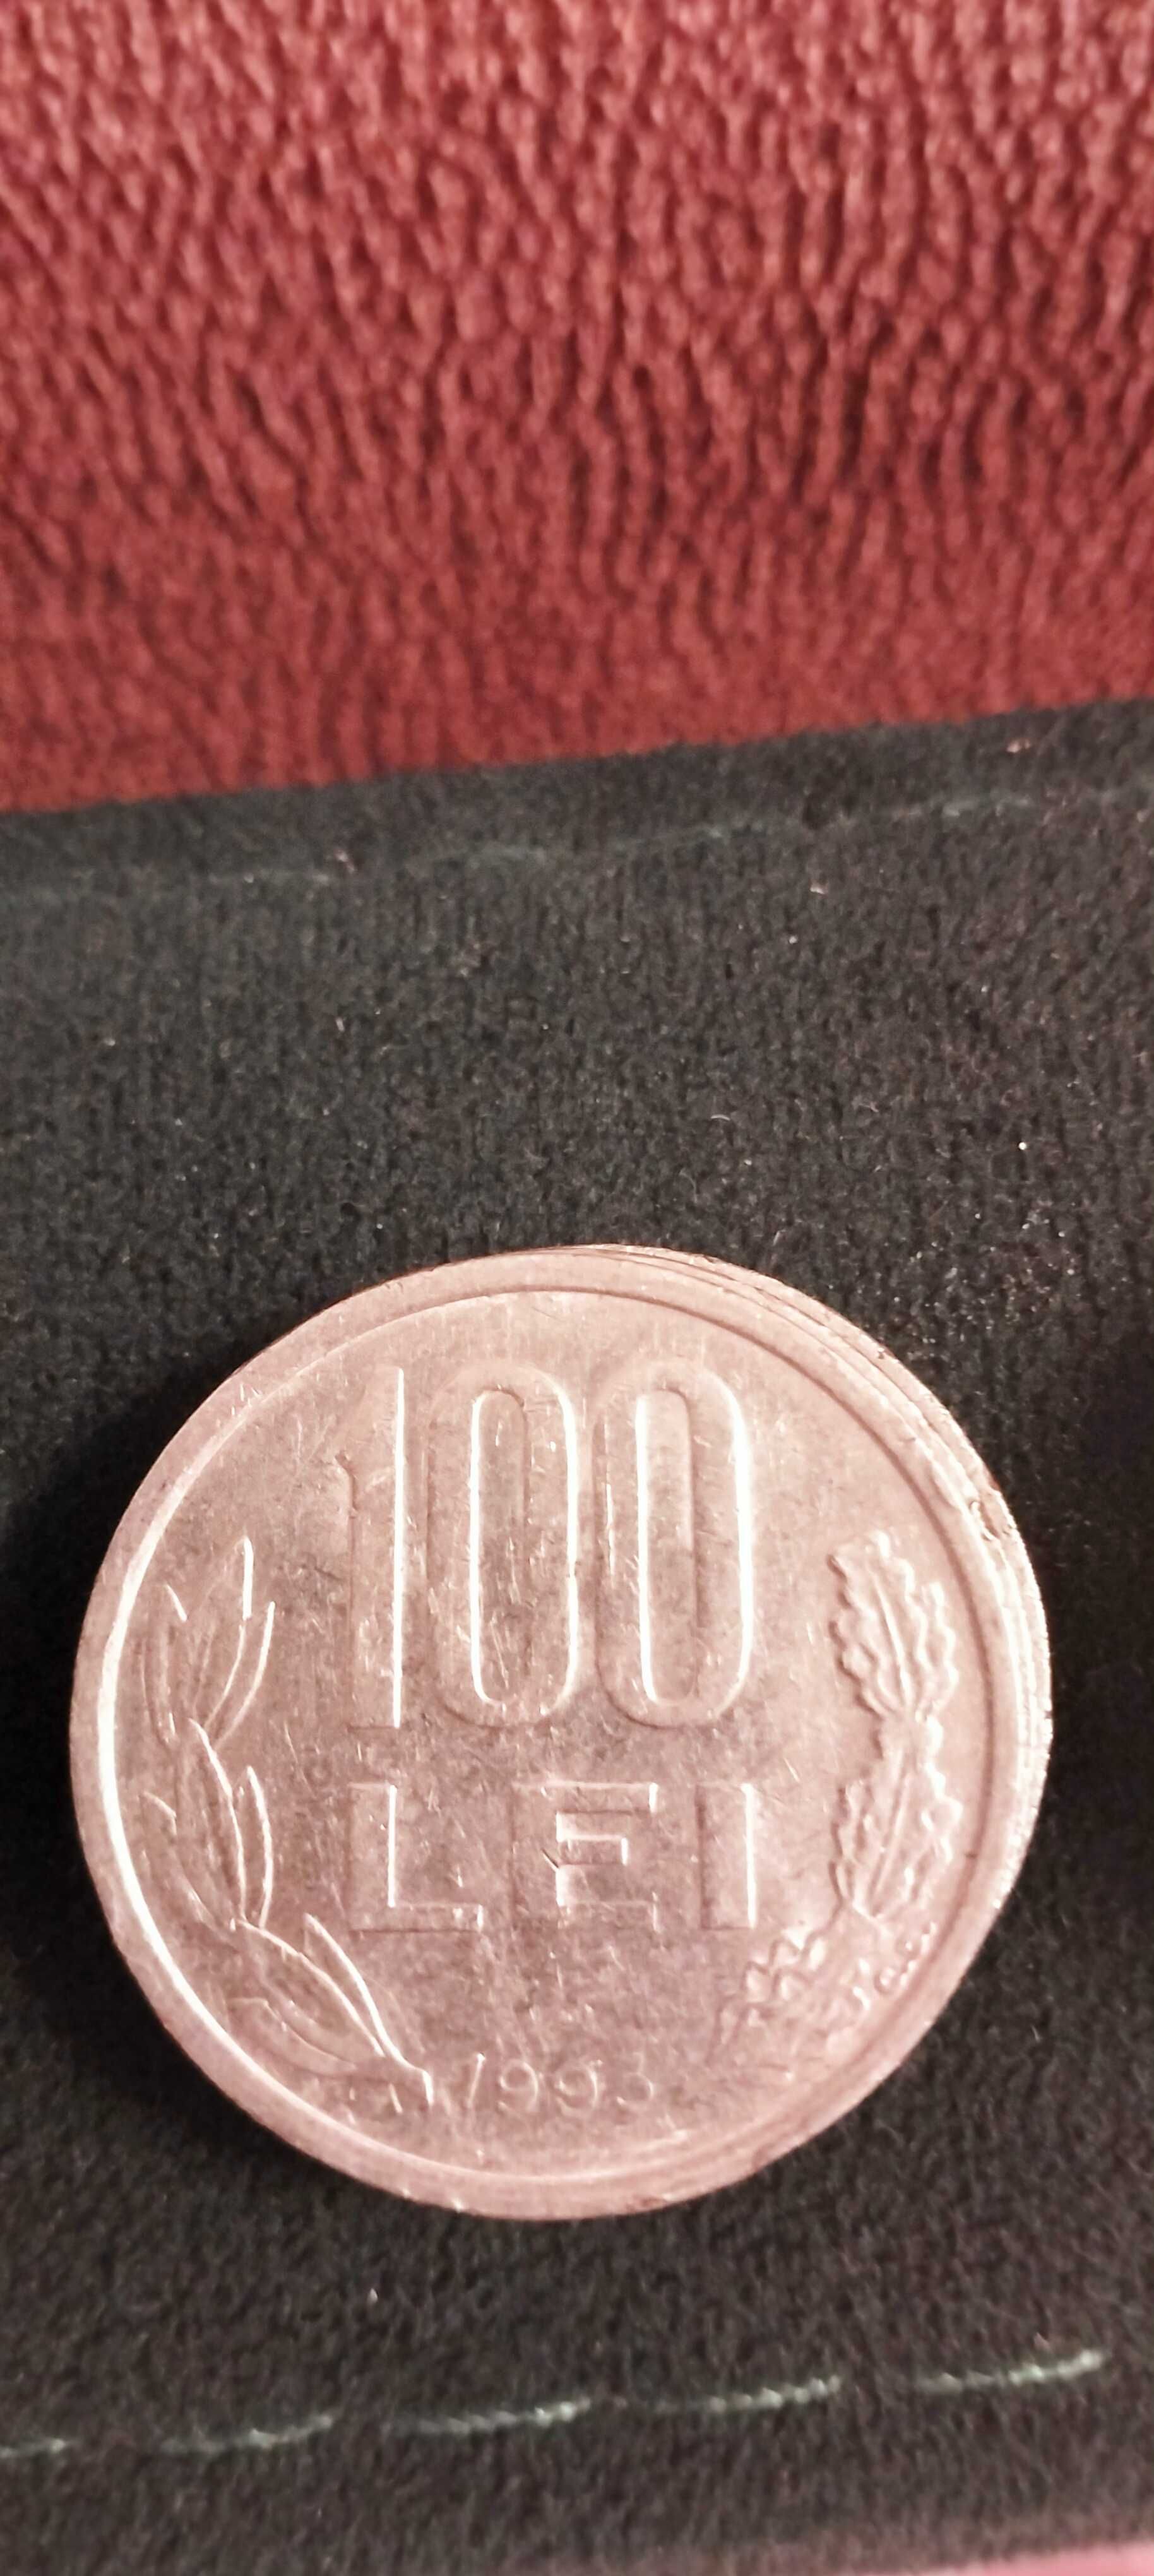 Monede 100 lei 1992-1993-1994